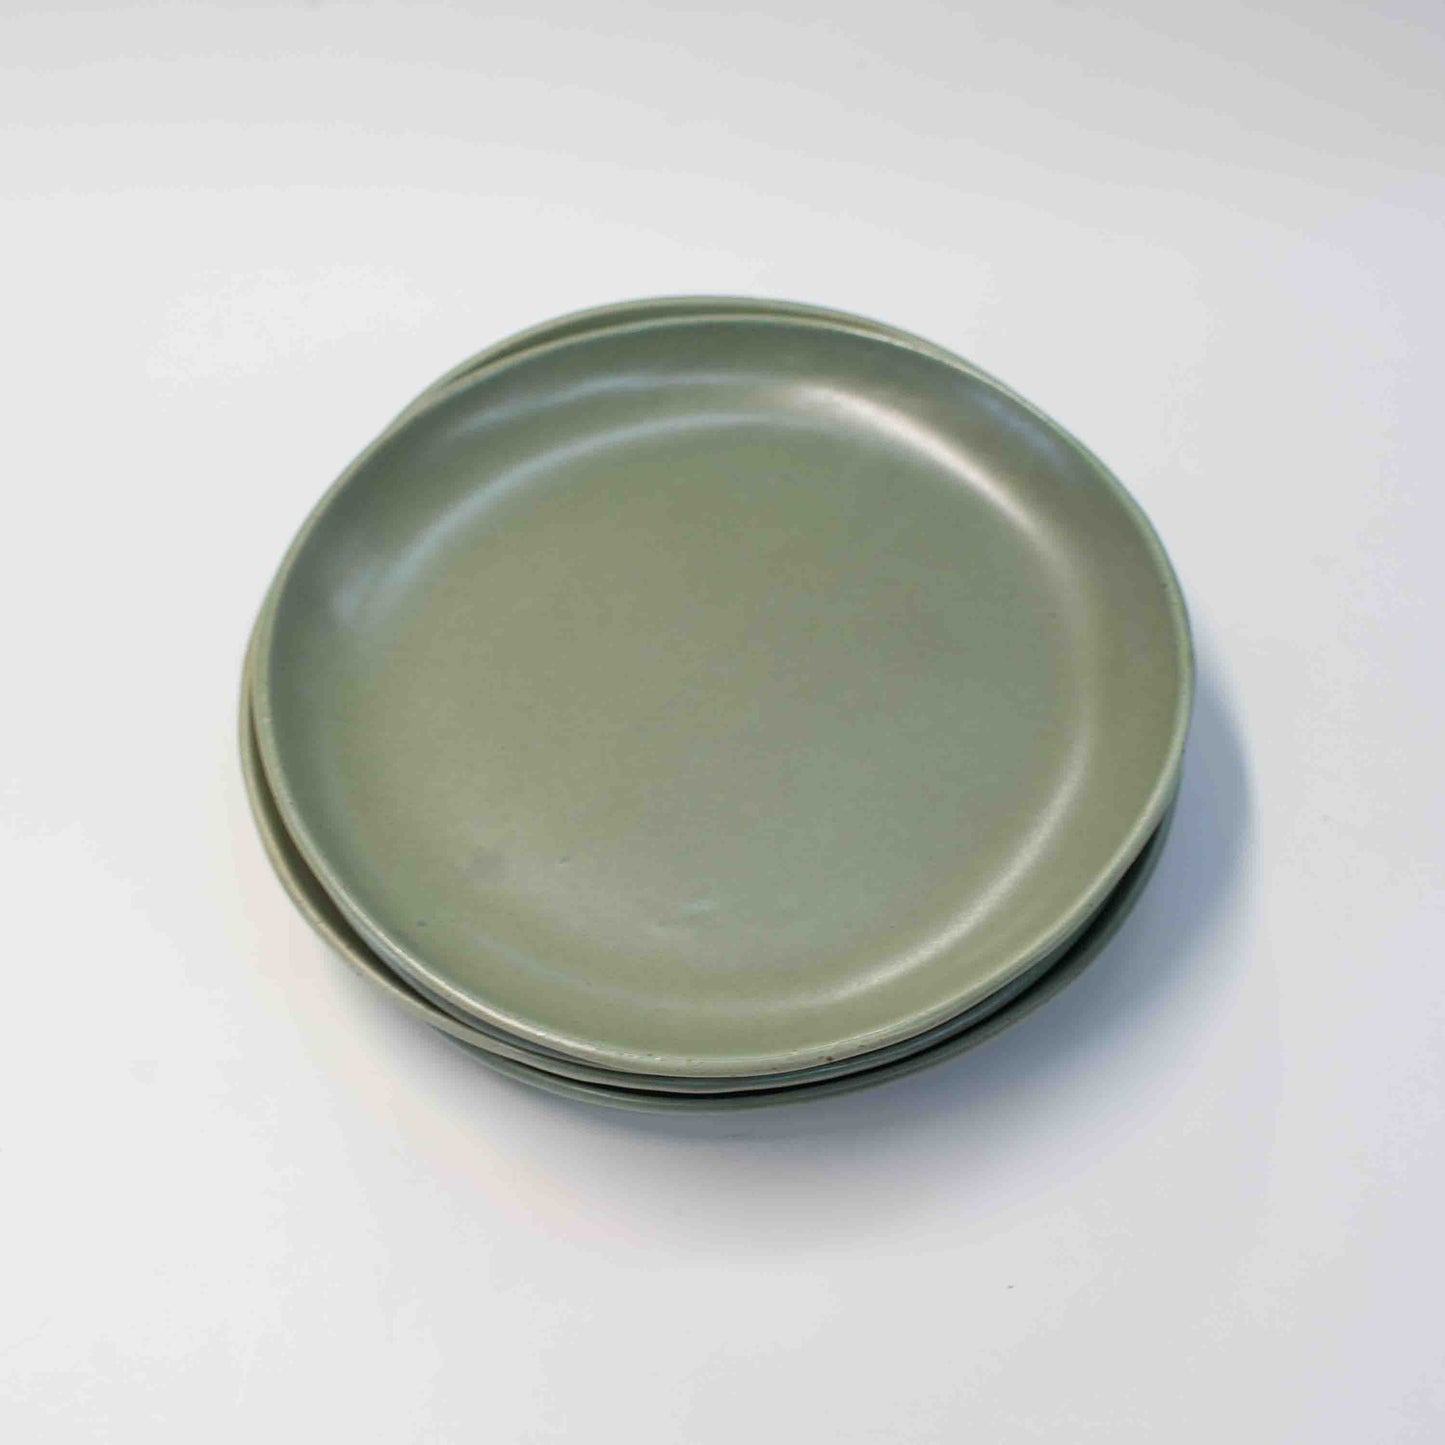 Large dinner plate - Sage green